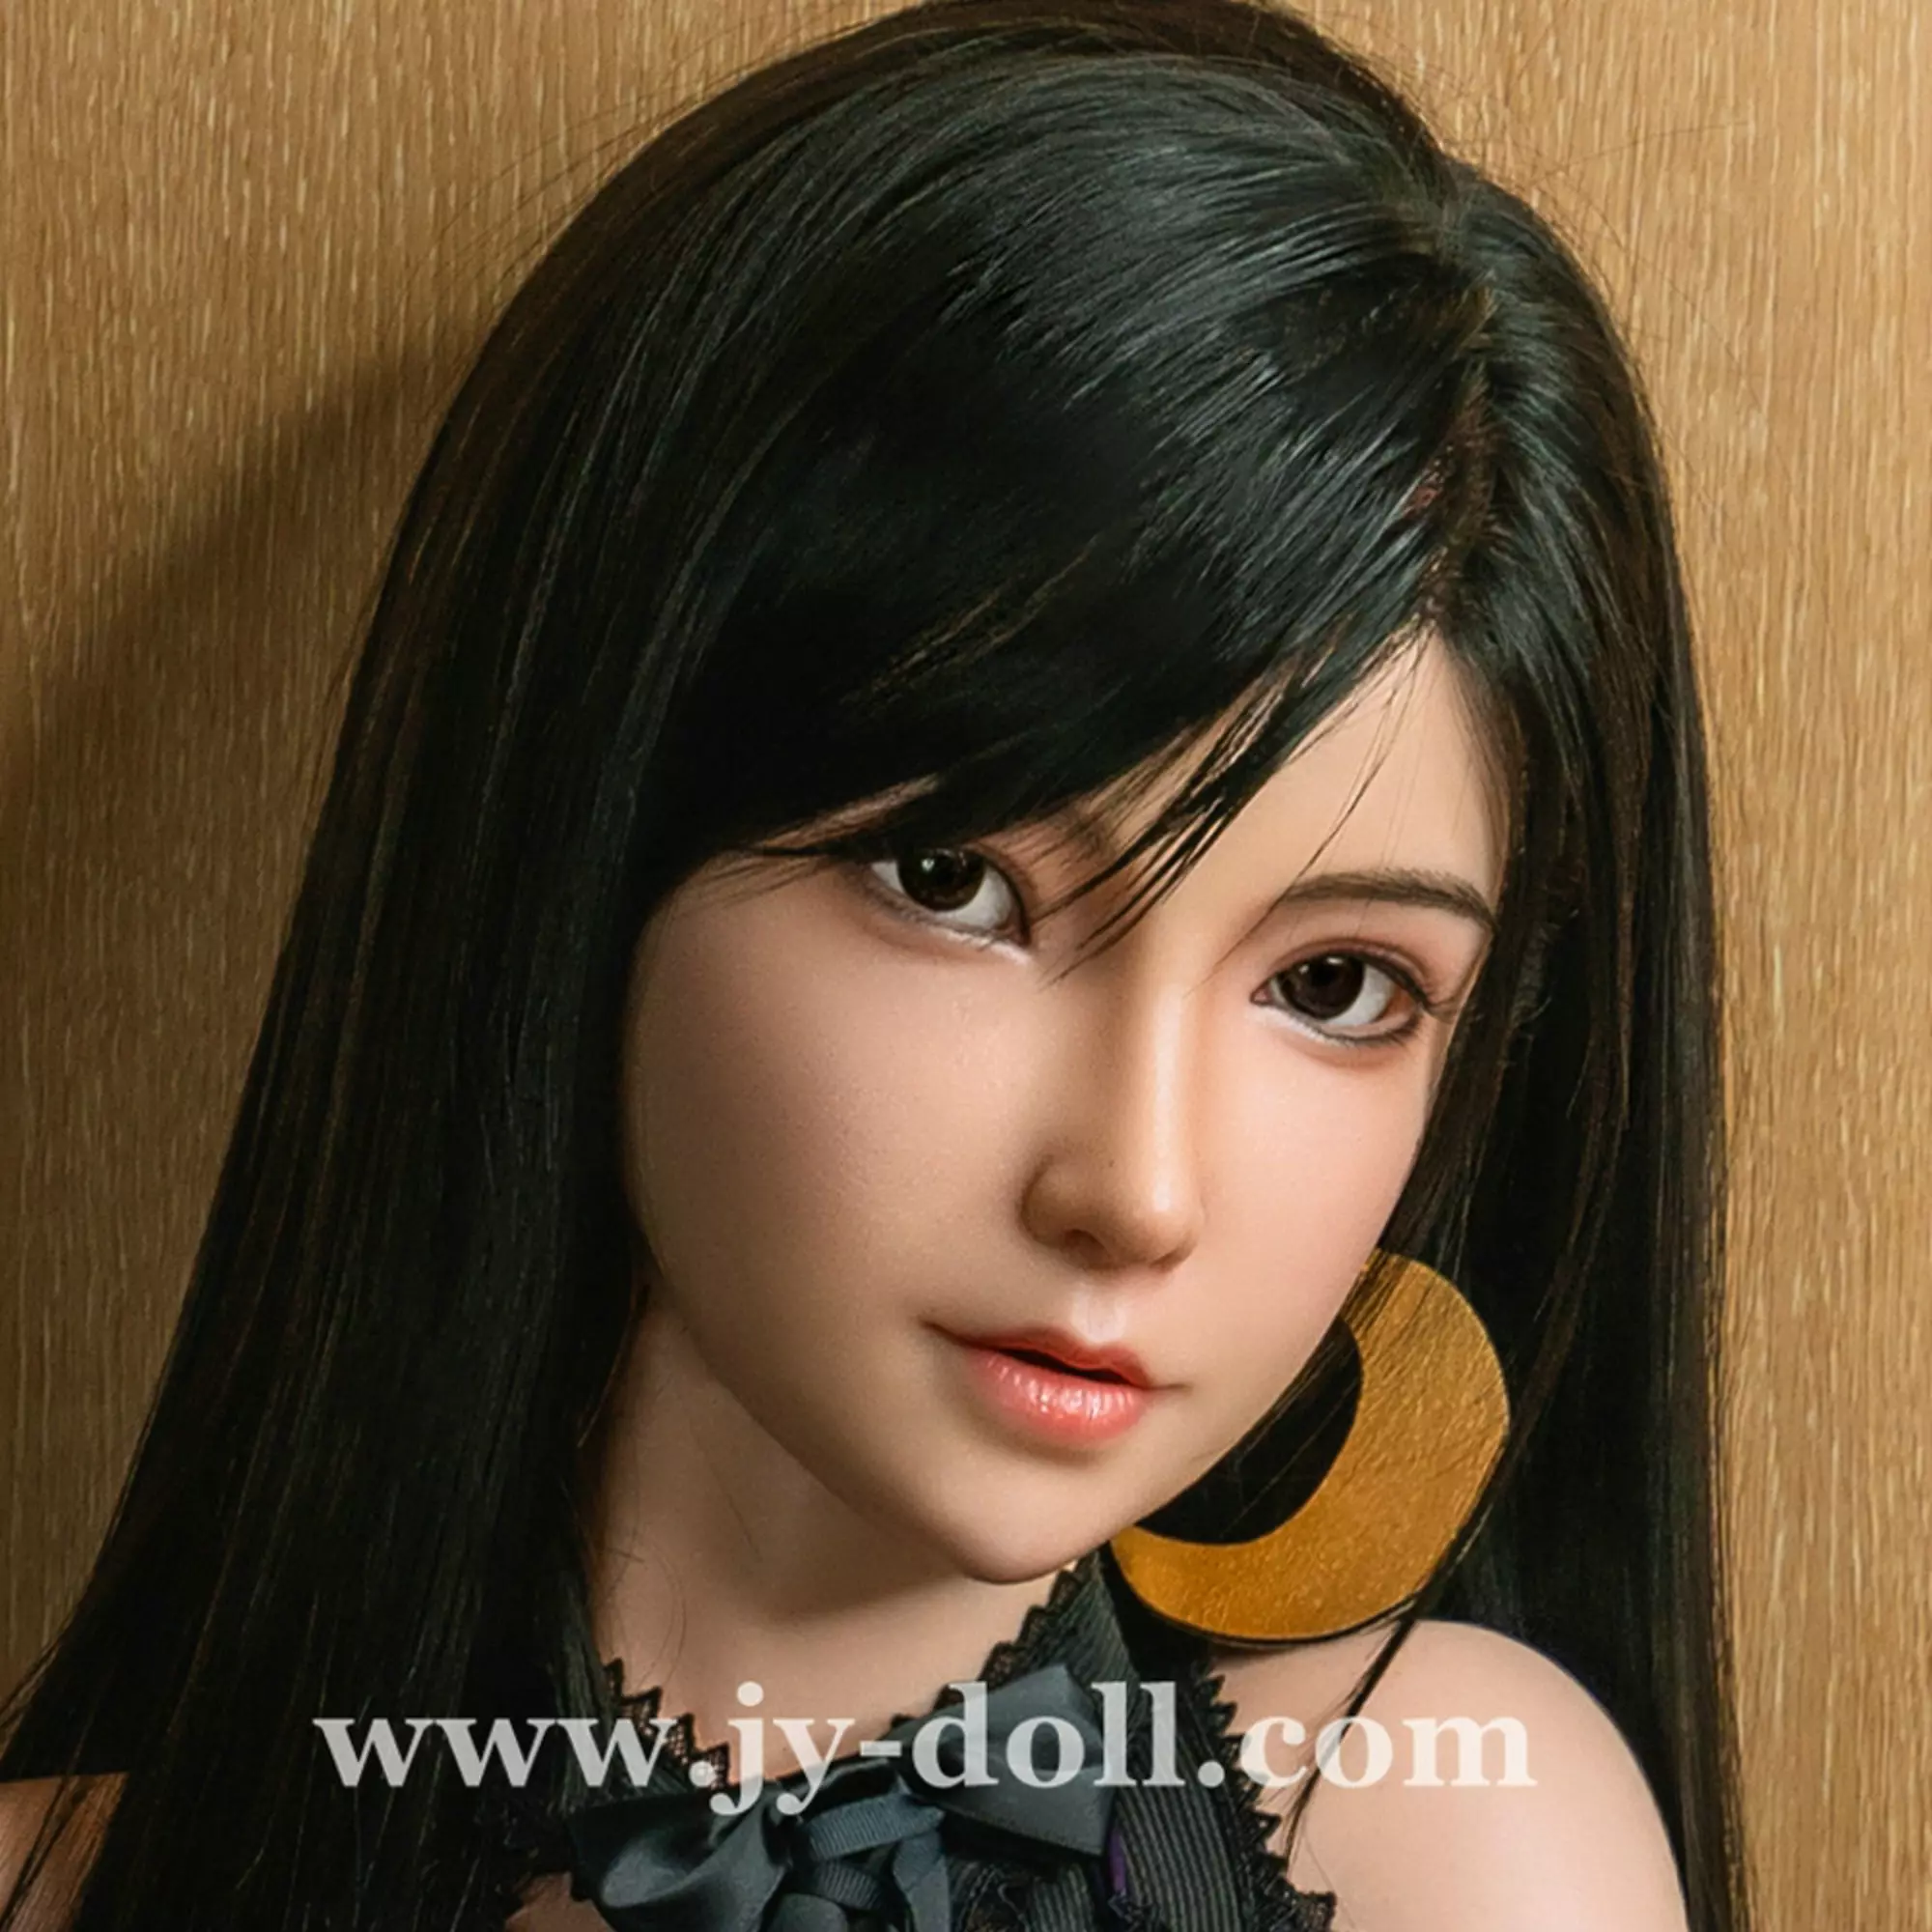 JY Doll silicone sex doll head Annie, removable jaw